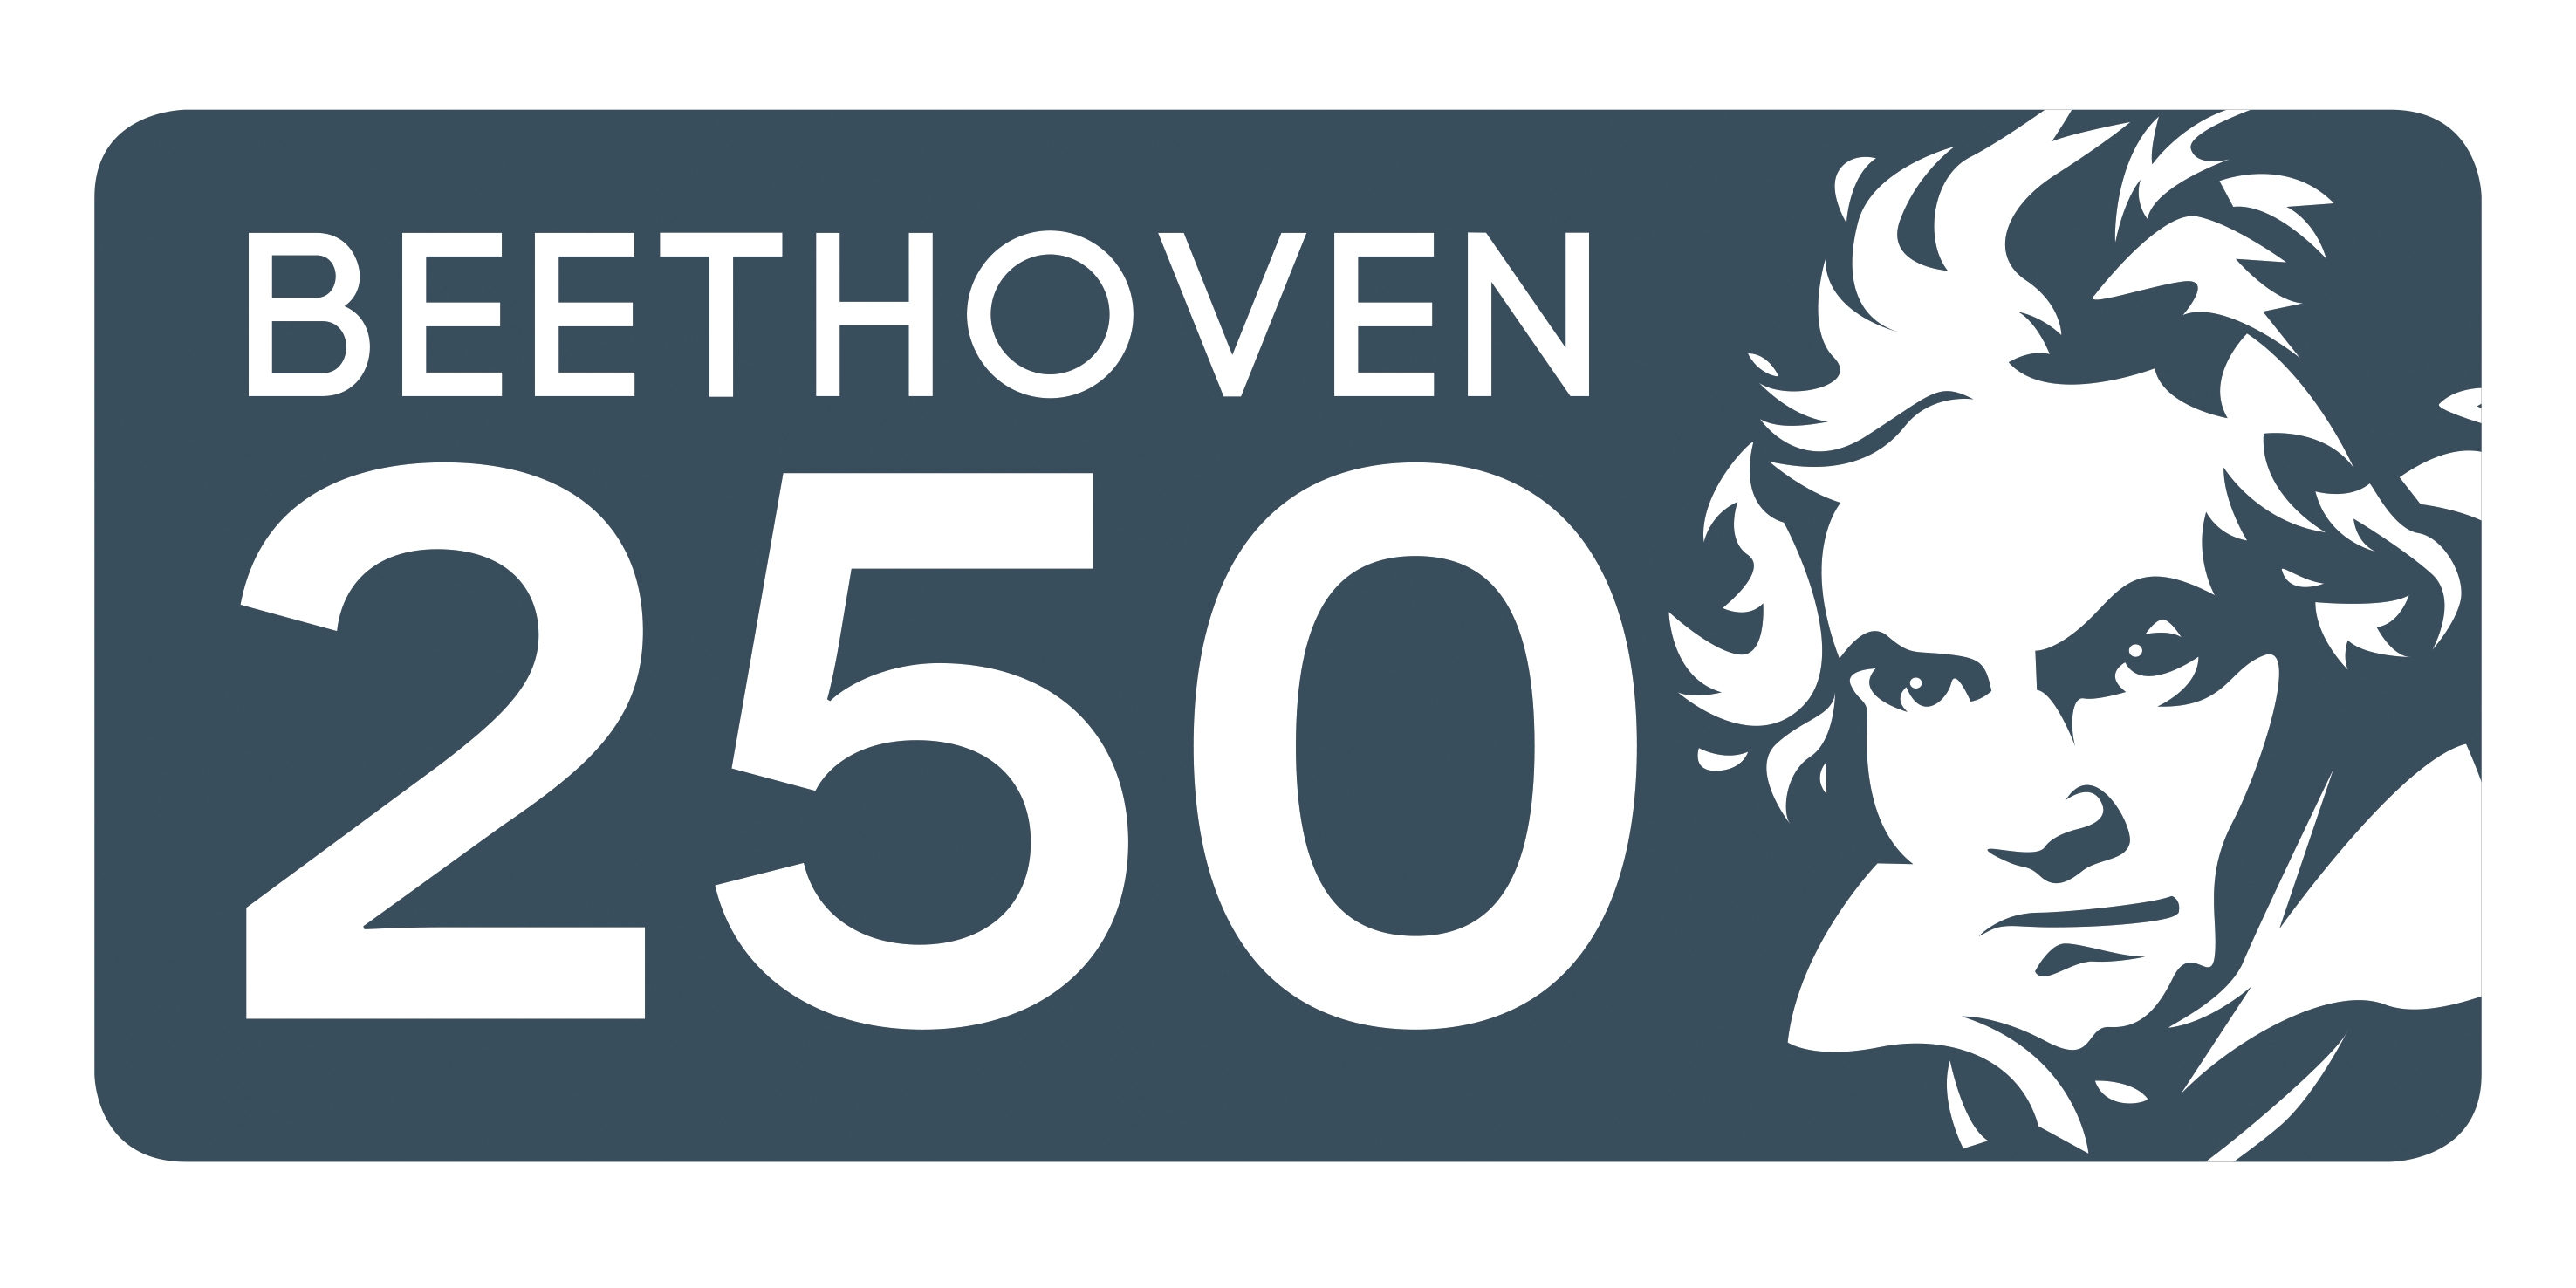 Beethoven’s 250th birthday